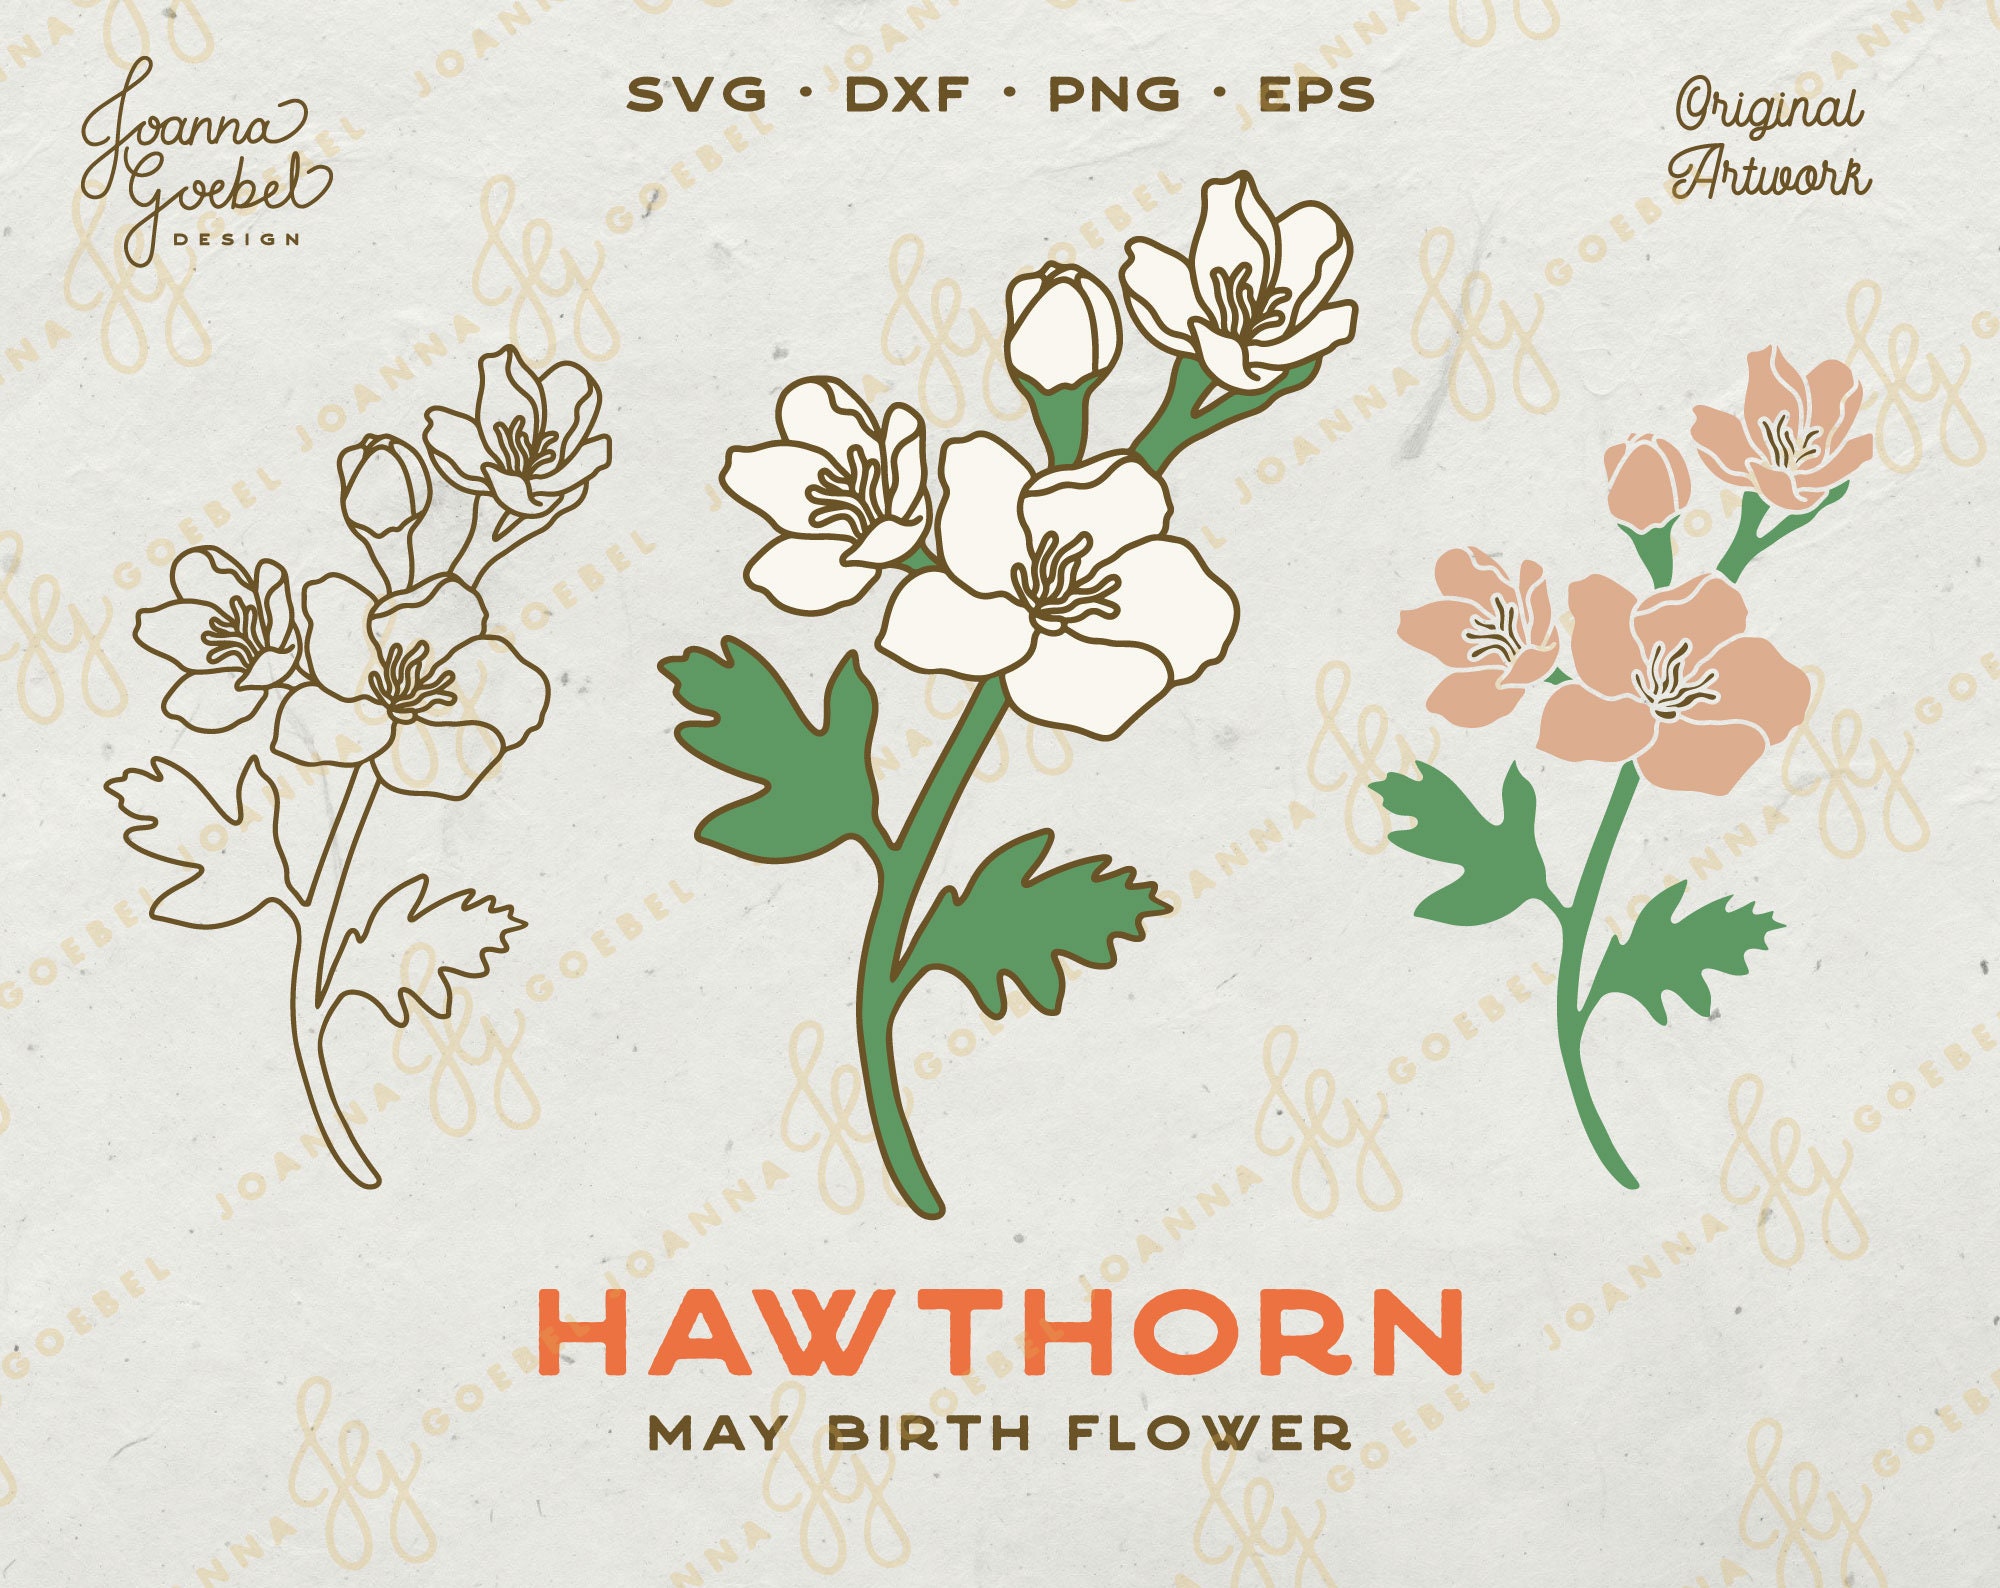 740 Hawthorn Flower Illustrations RoyaltyFree Vector Graphics  Clip Art   iStock  Hawthorn flower silhouette